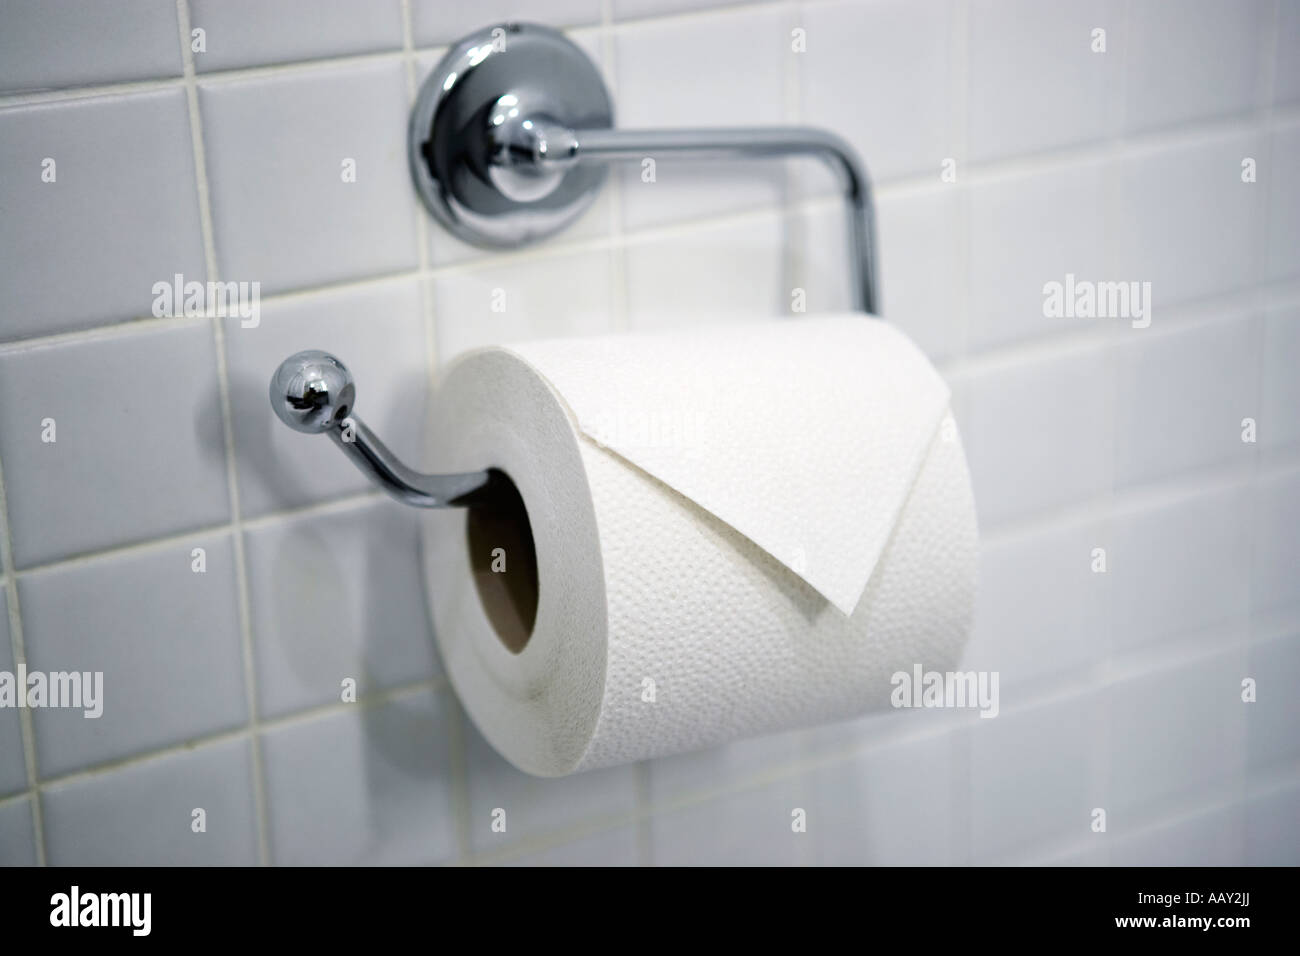 Toilet roll neatly folded in hotel bathroom Stock Photo